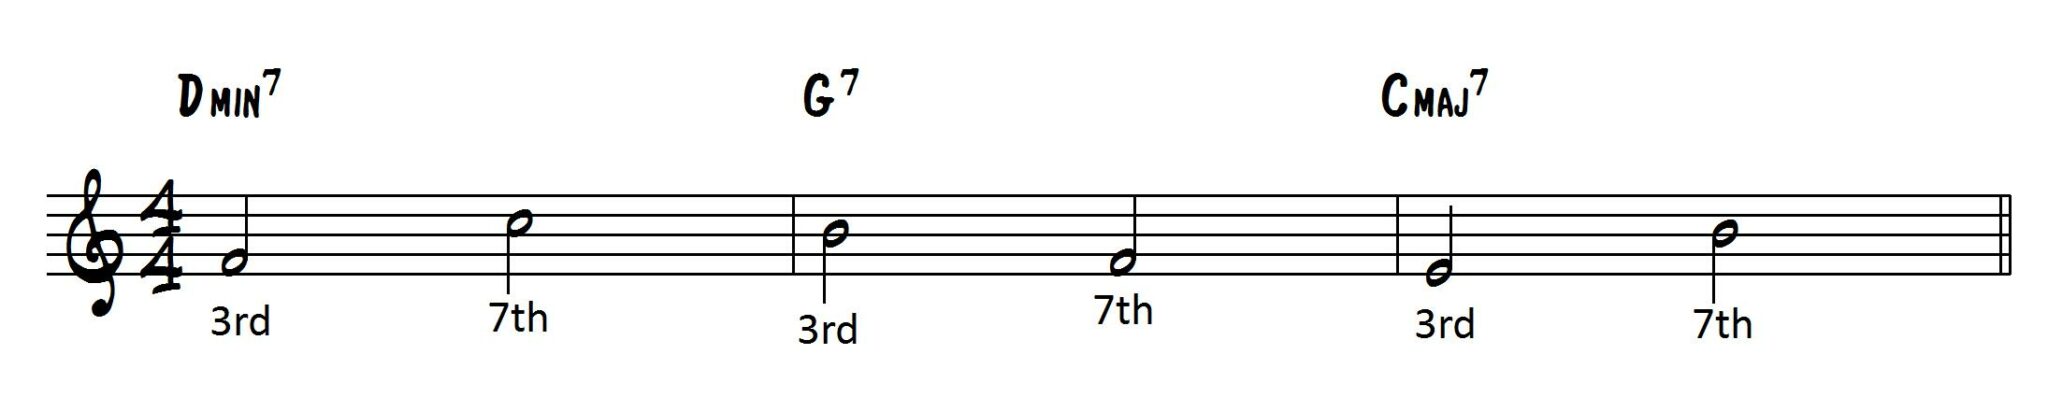 Guide tones melodic ii V I